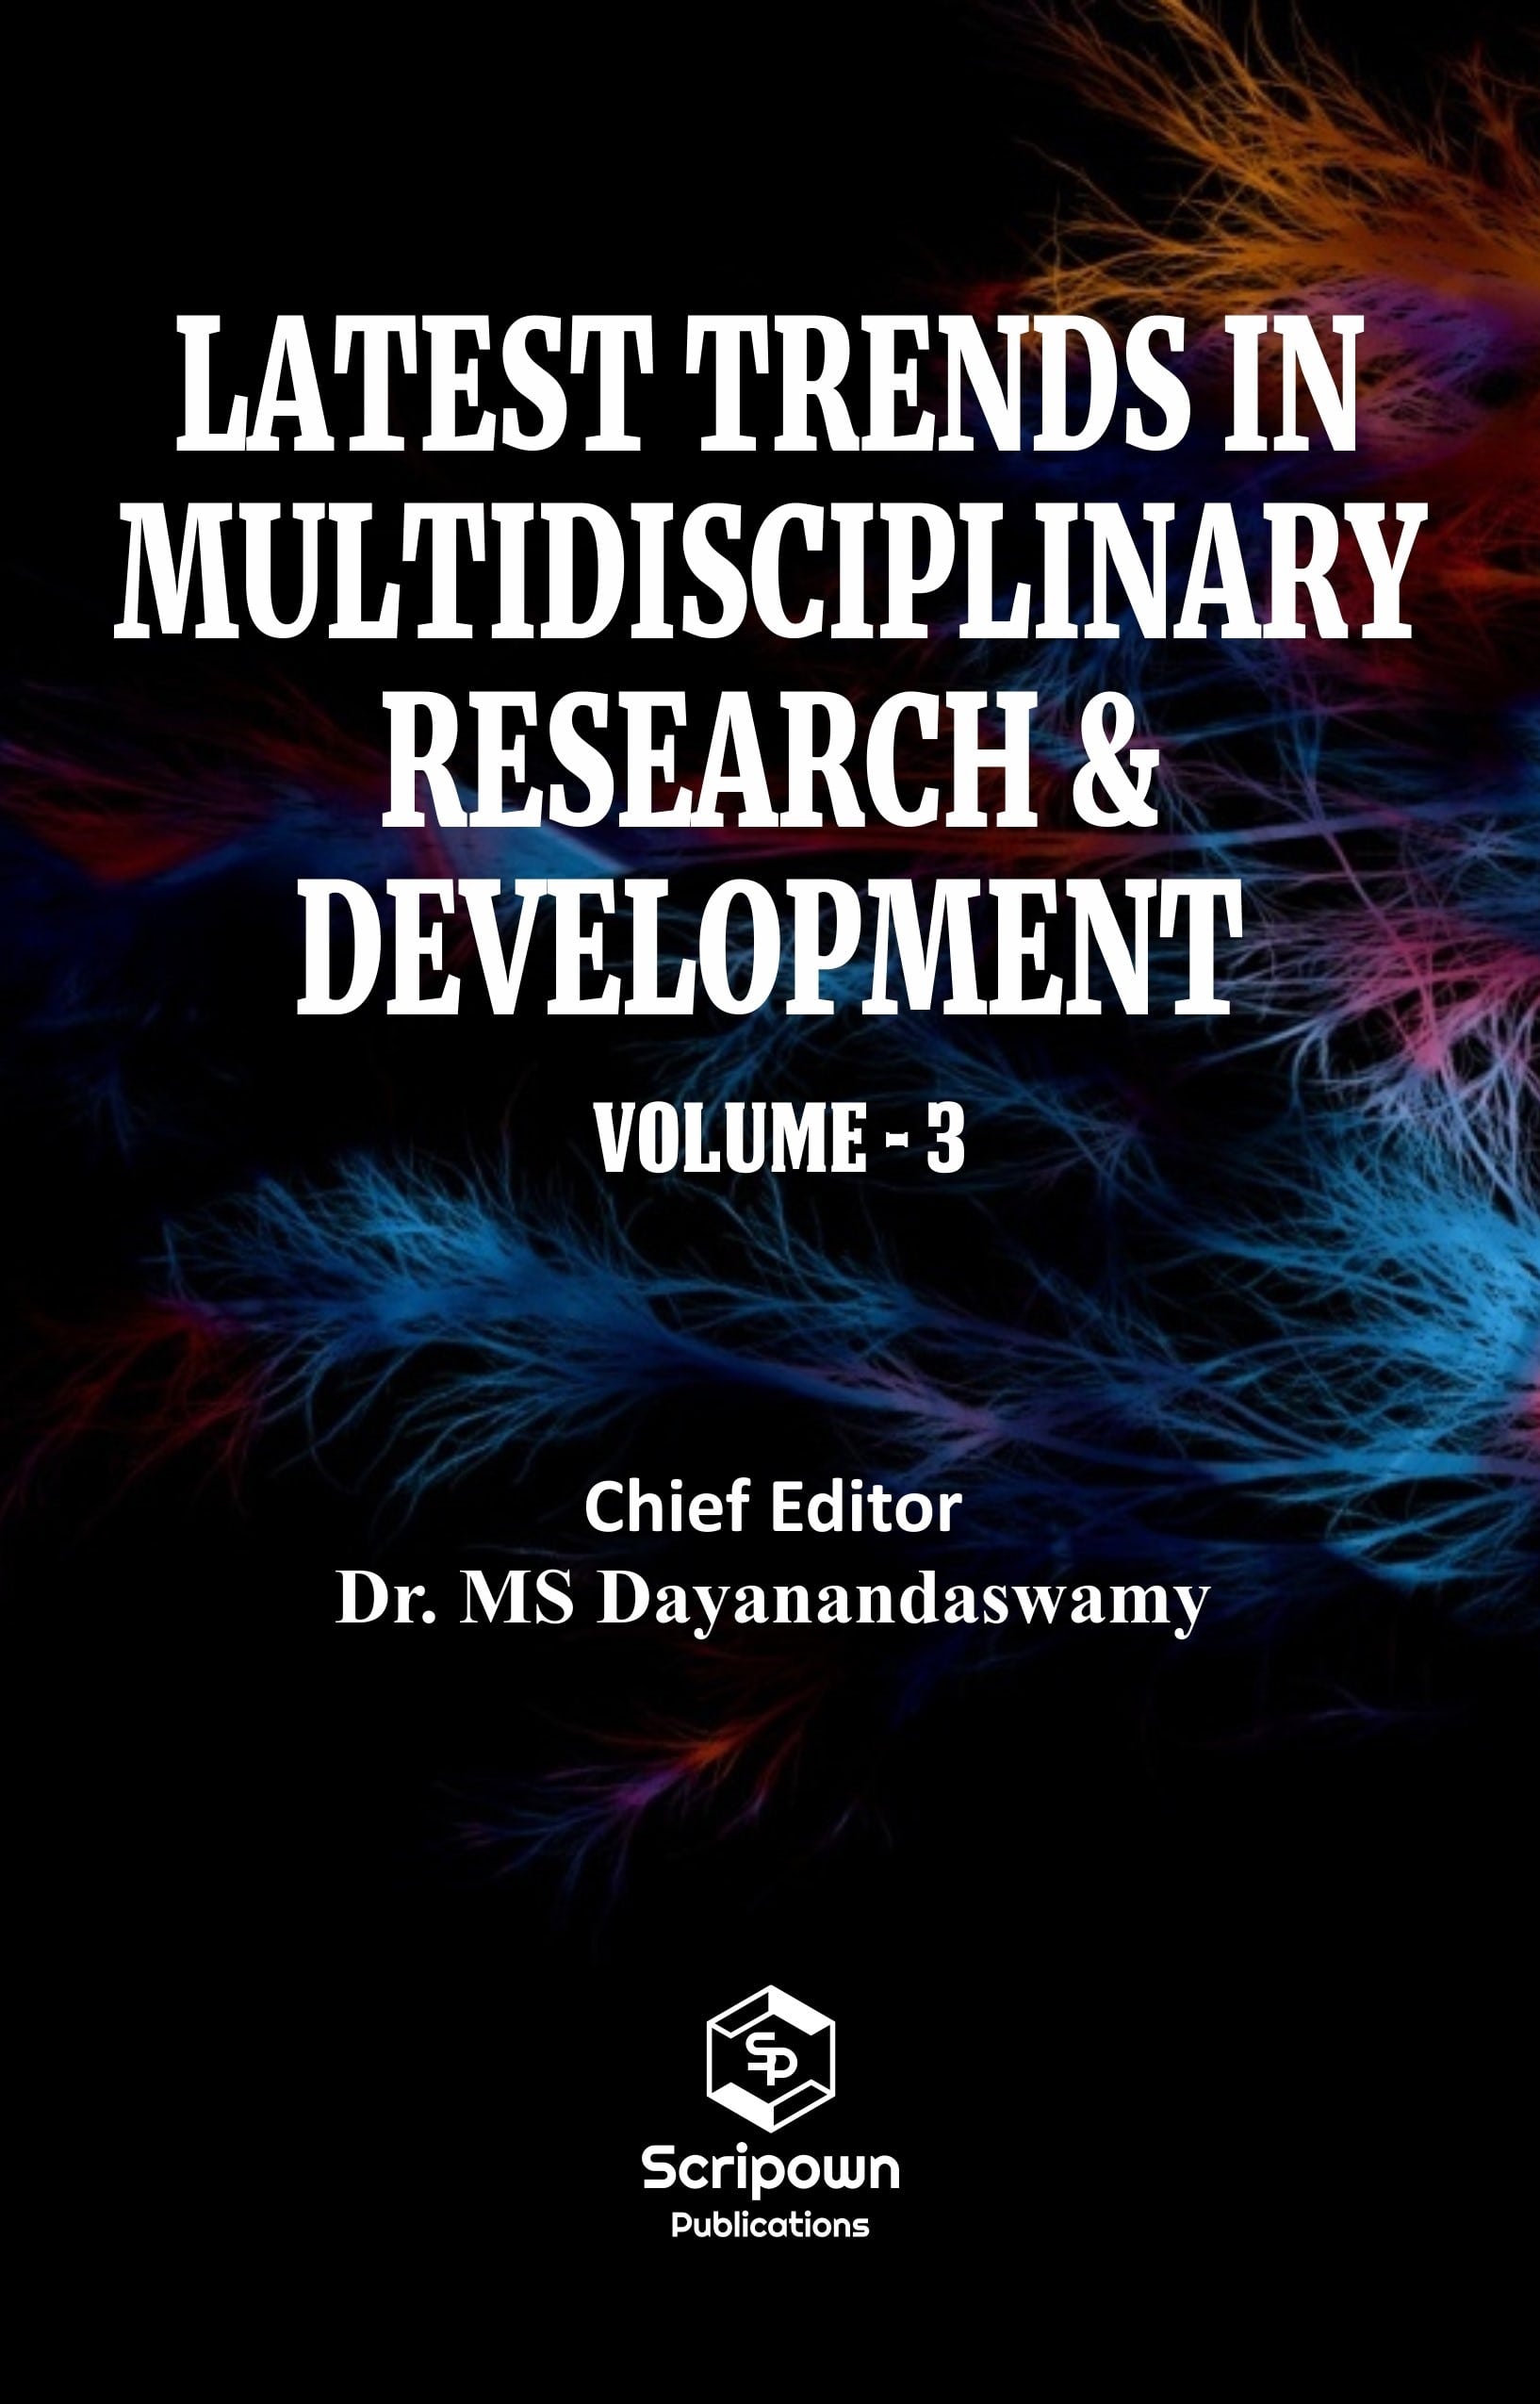 Latest Trends in Multidisciplinary Research & Development (Volume - 3)